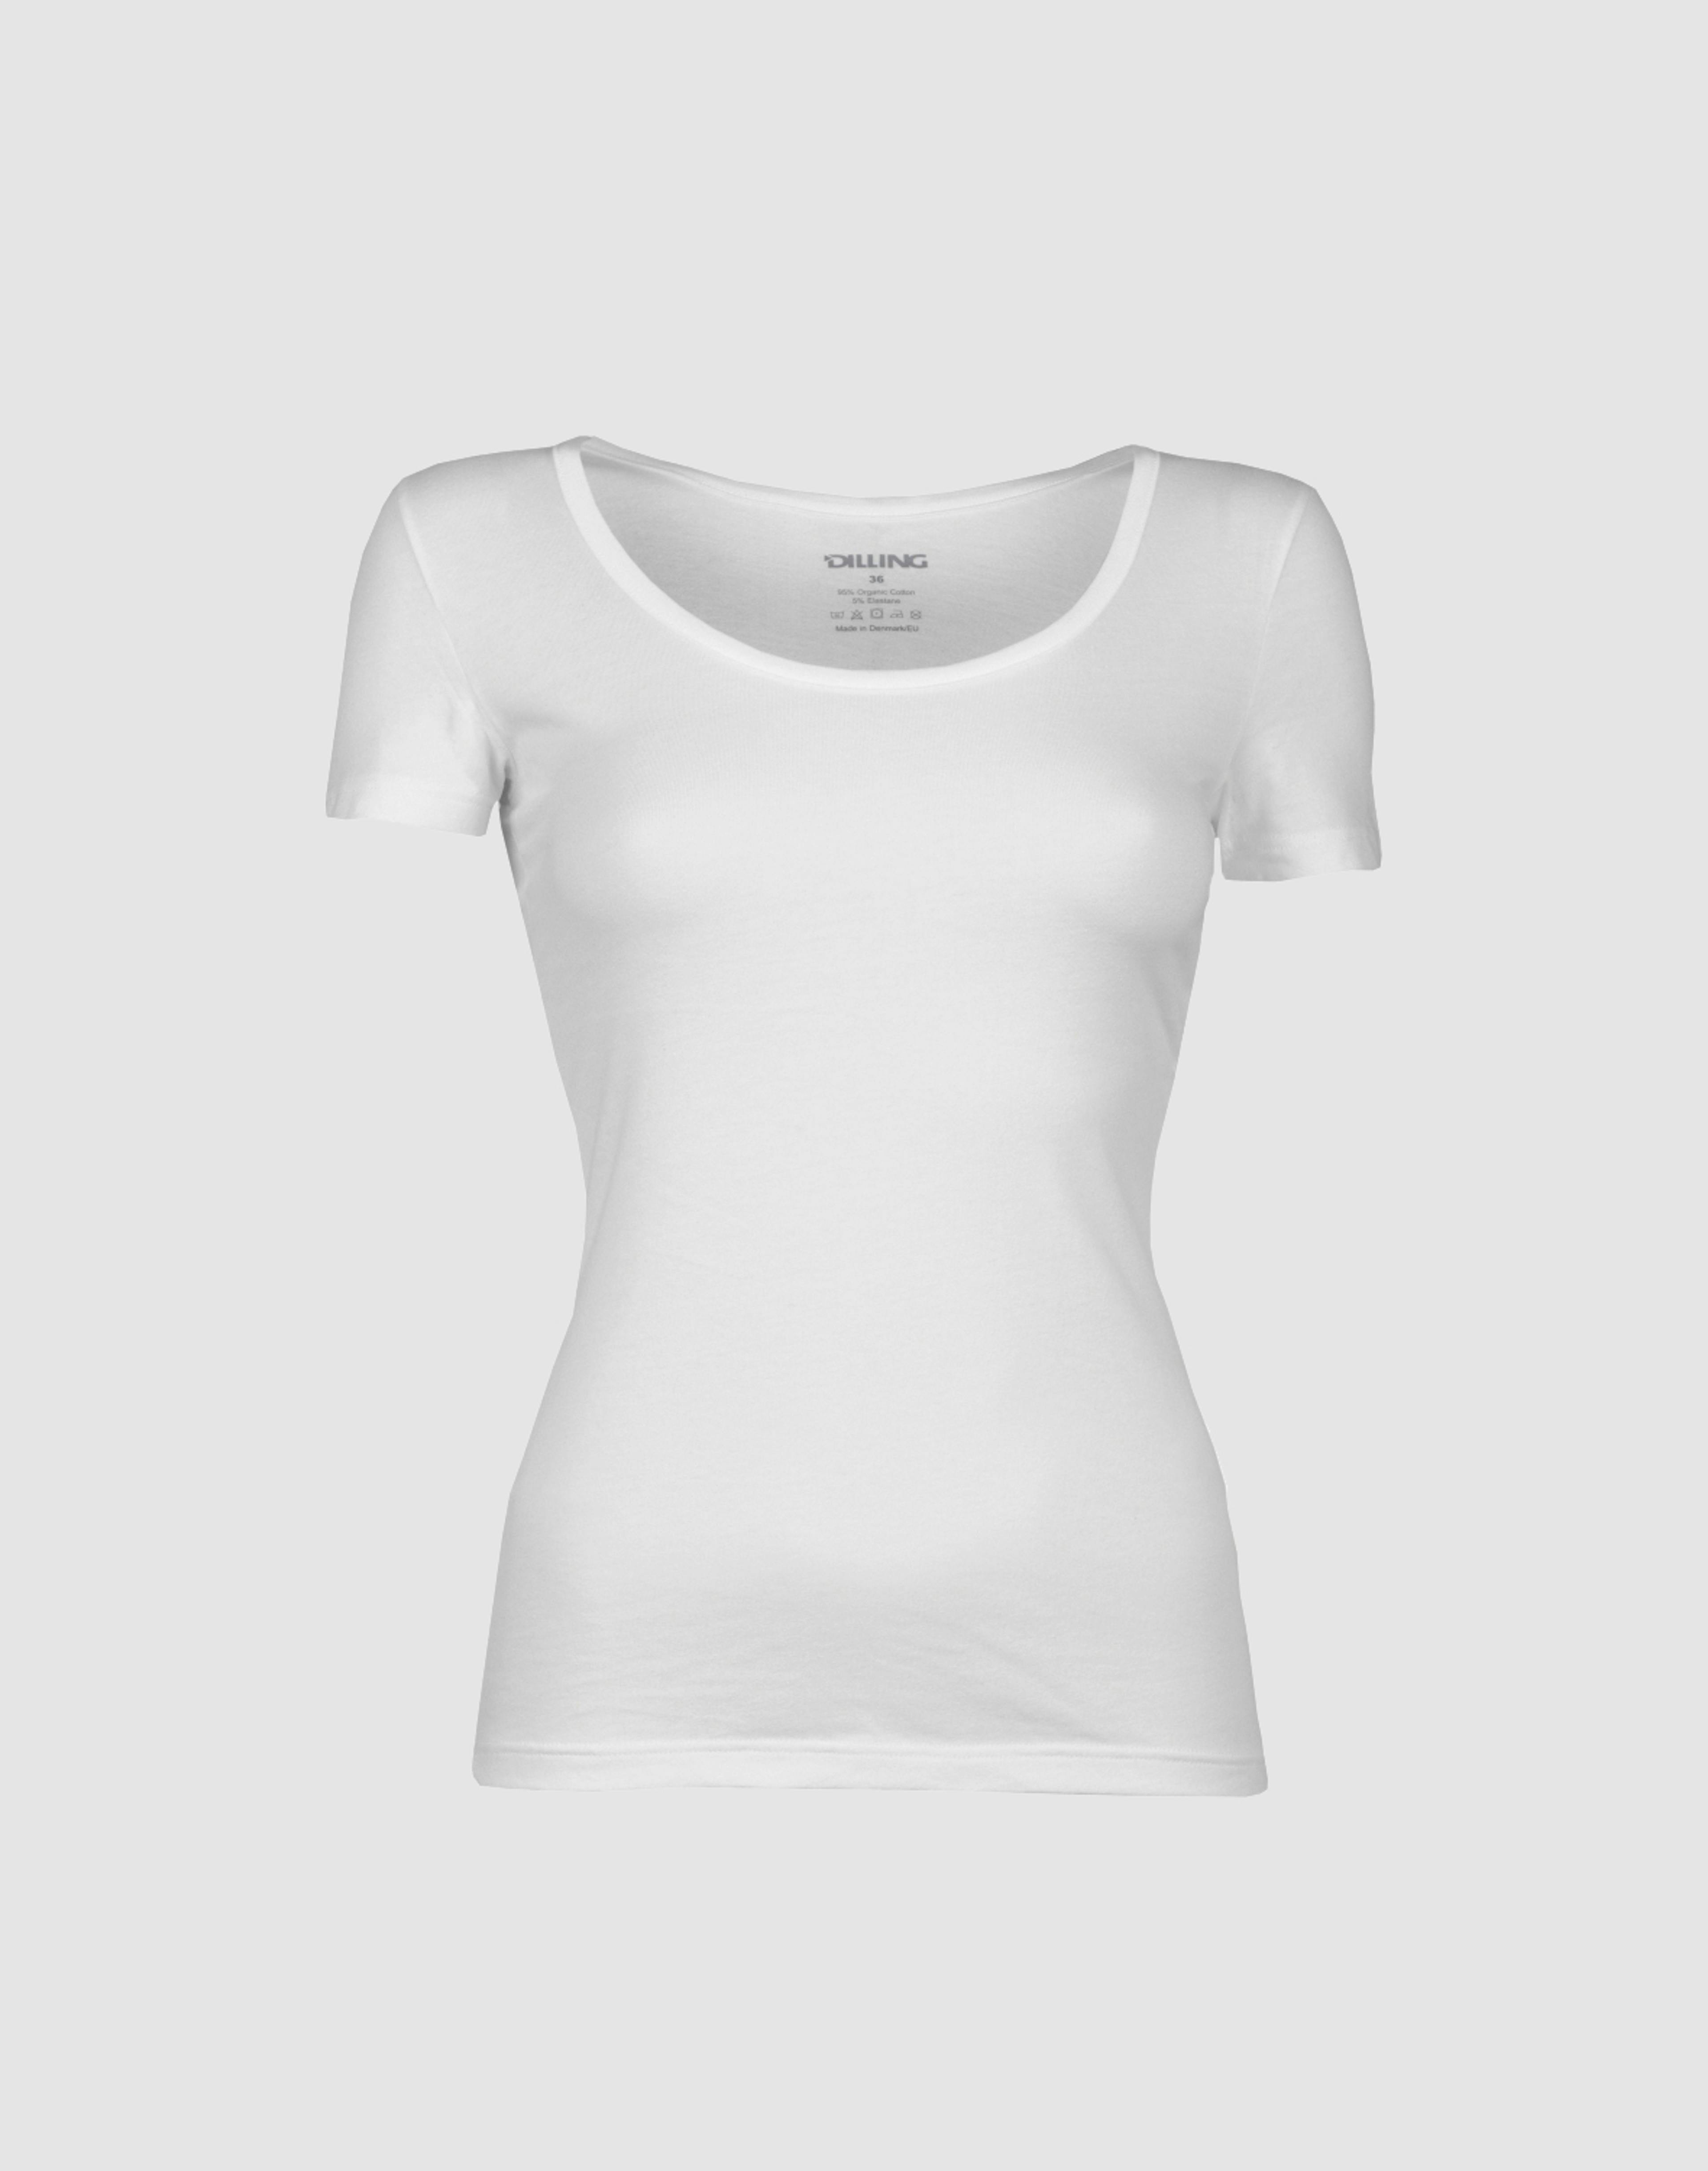 Dilling - T-shirt- white - Women\'s cotton White